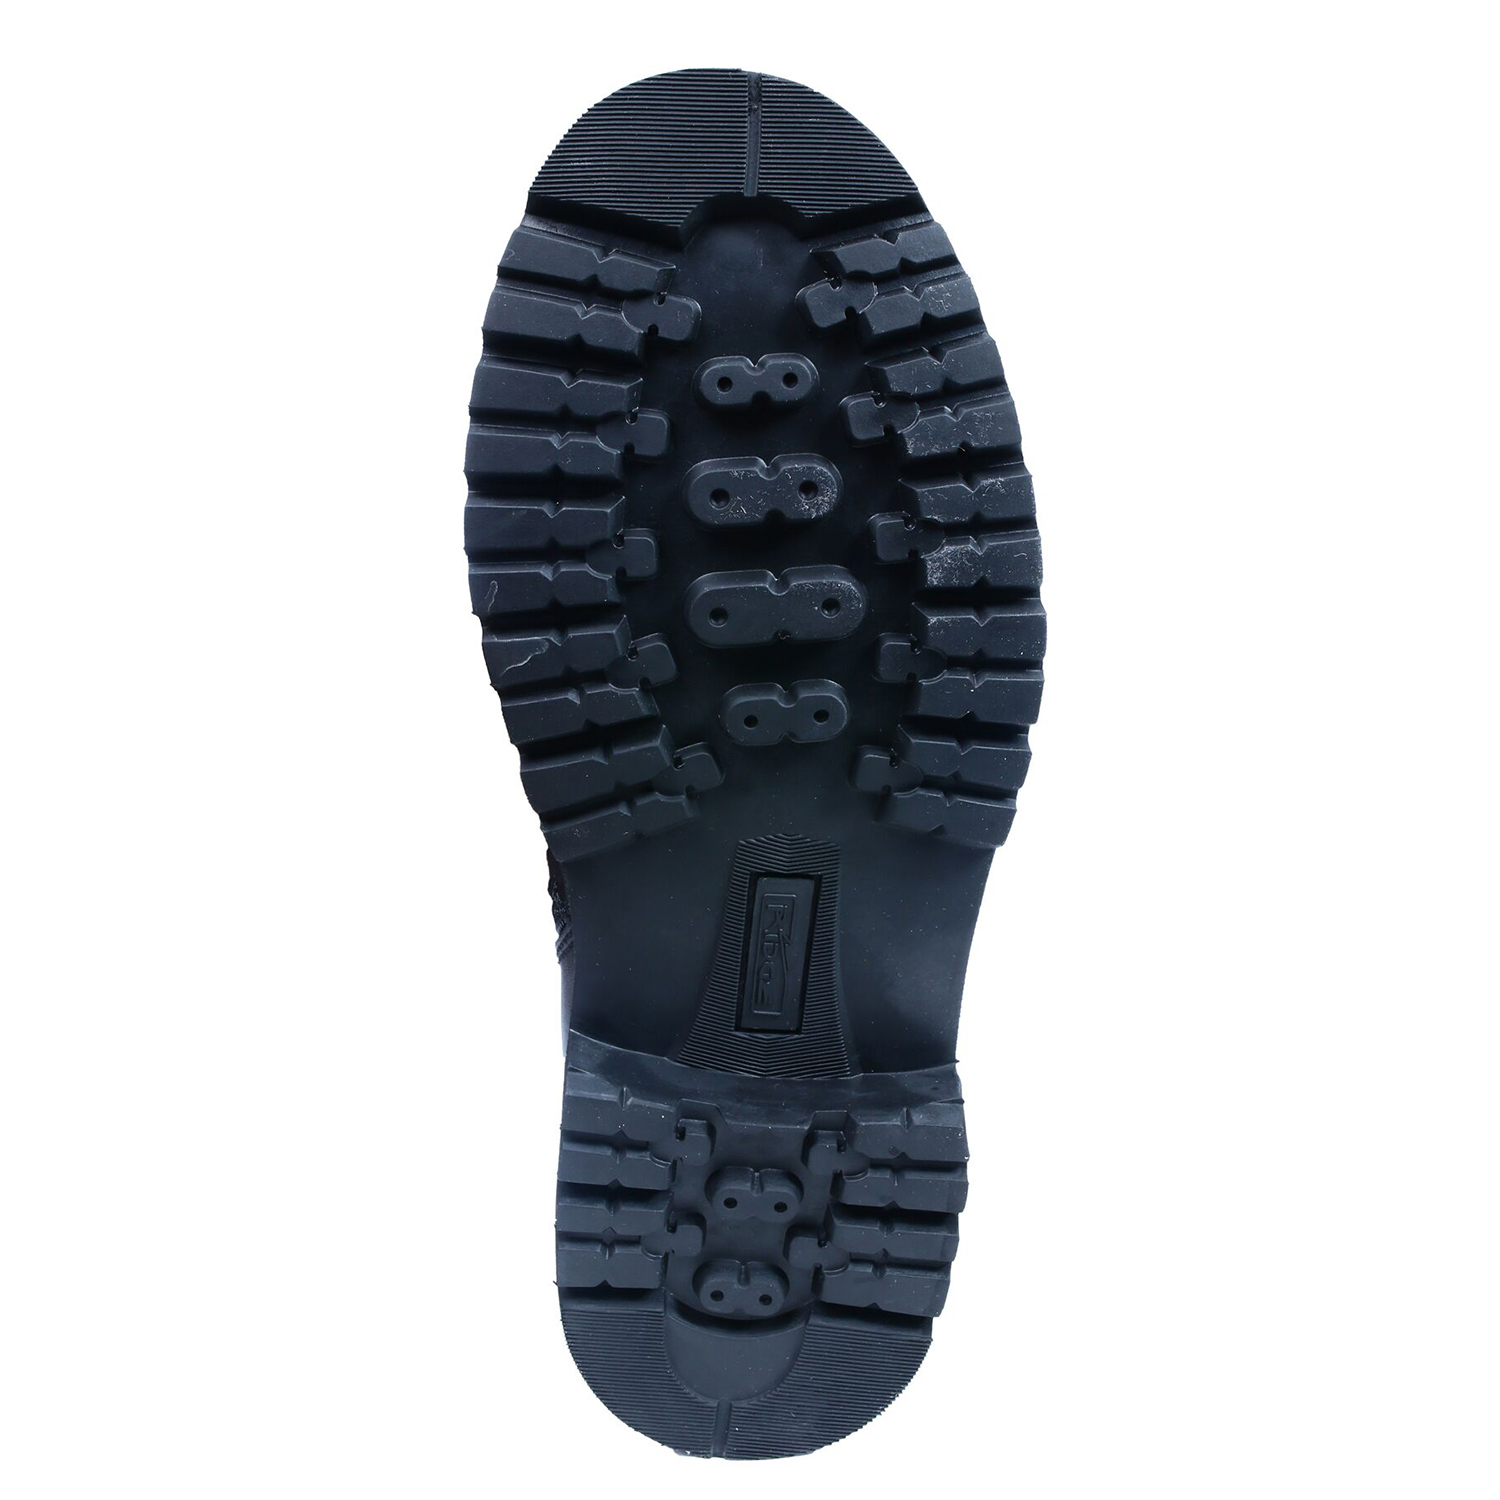 Ridge Outdoors Ridge Footwear MC206 Men's All Leather Side Zip 8" Tactical Boots